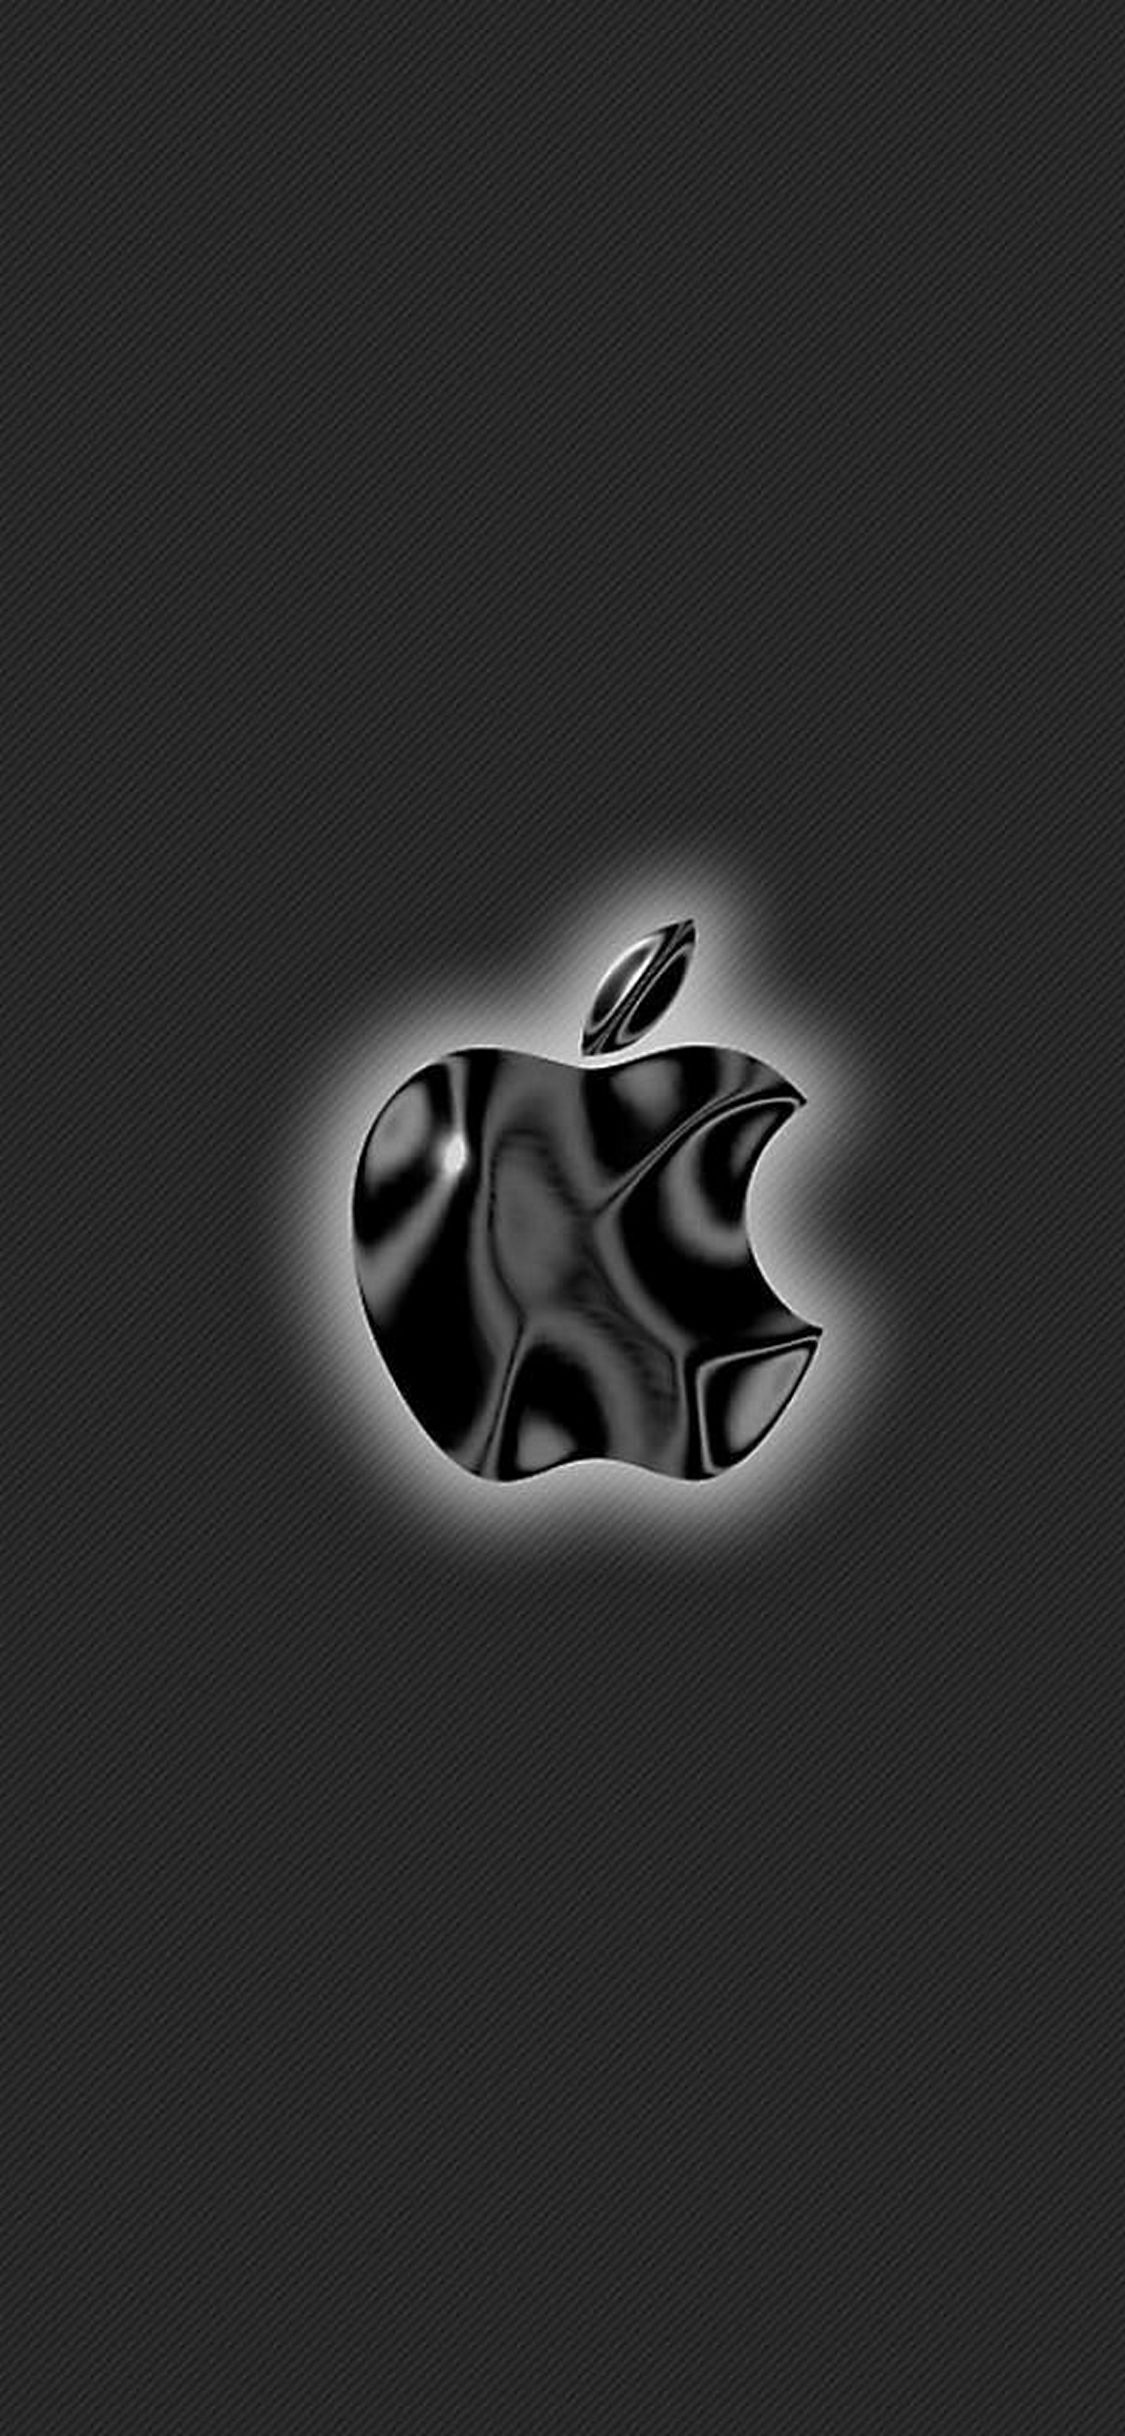 Apple Logo iPhone Wallpaper - 18